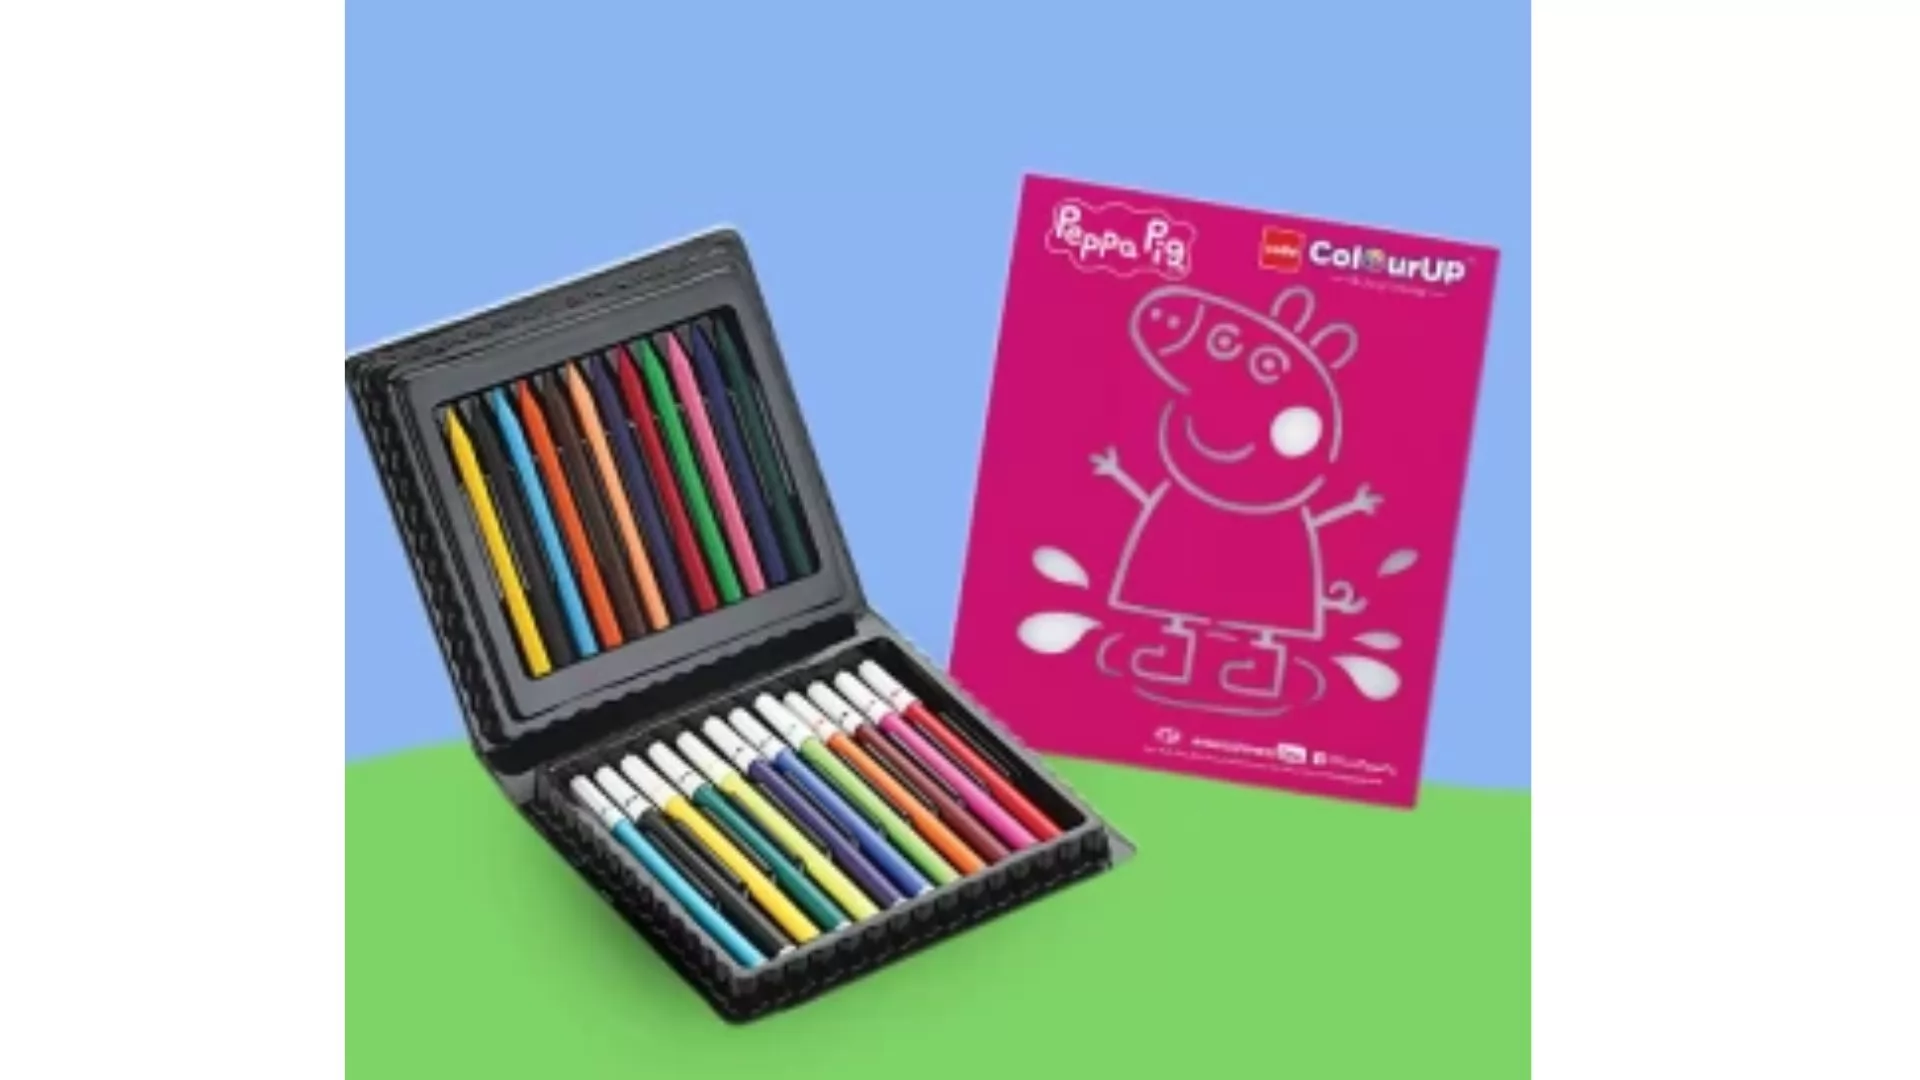 Cello Colourup Peppa Pig Colouring Kit